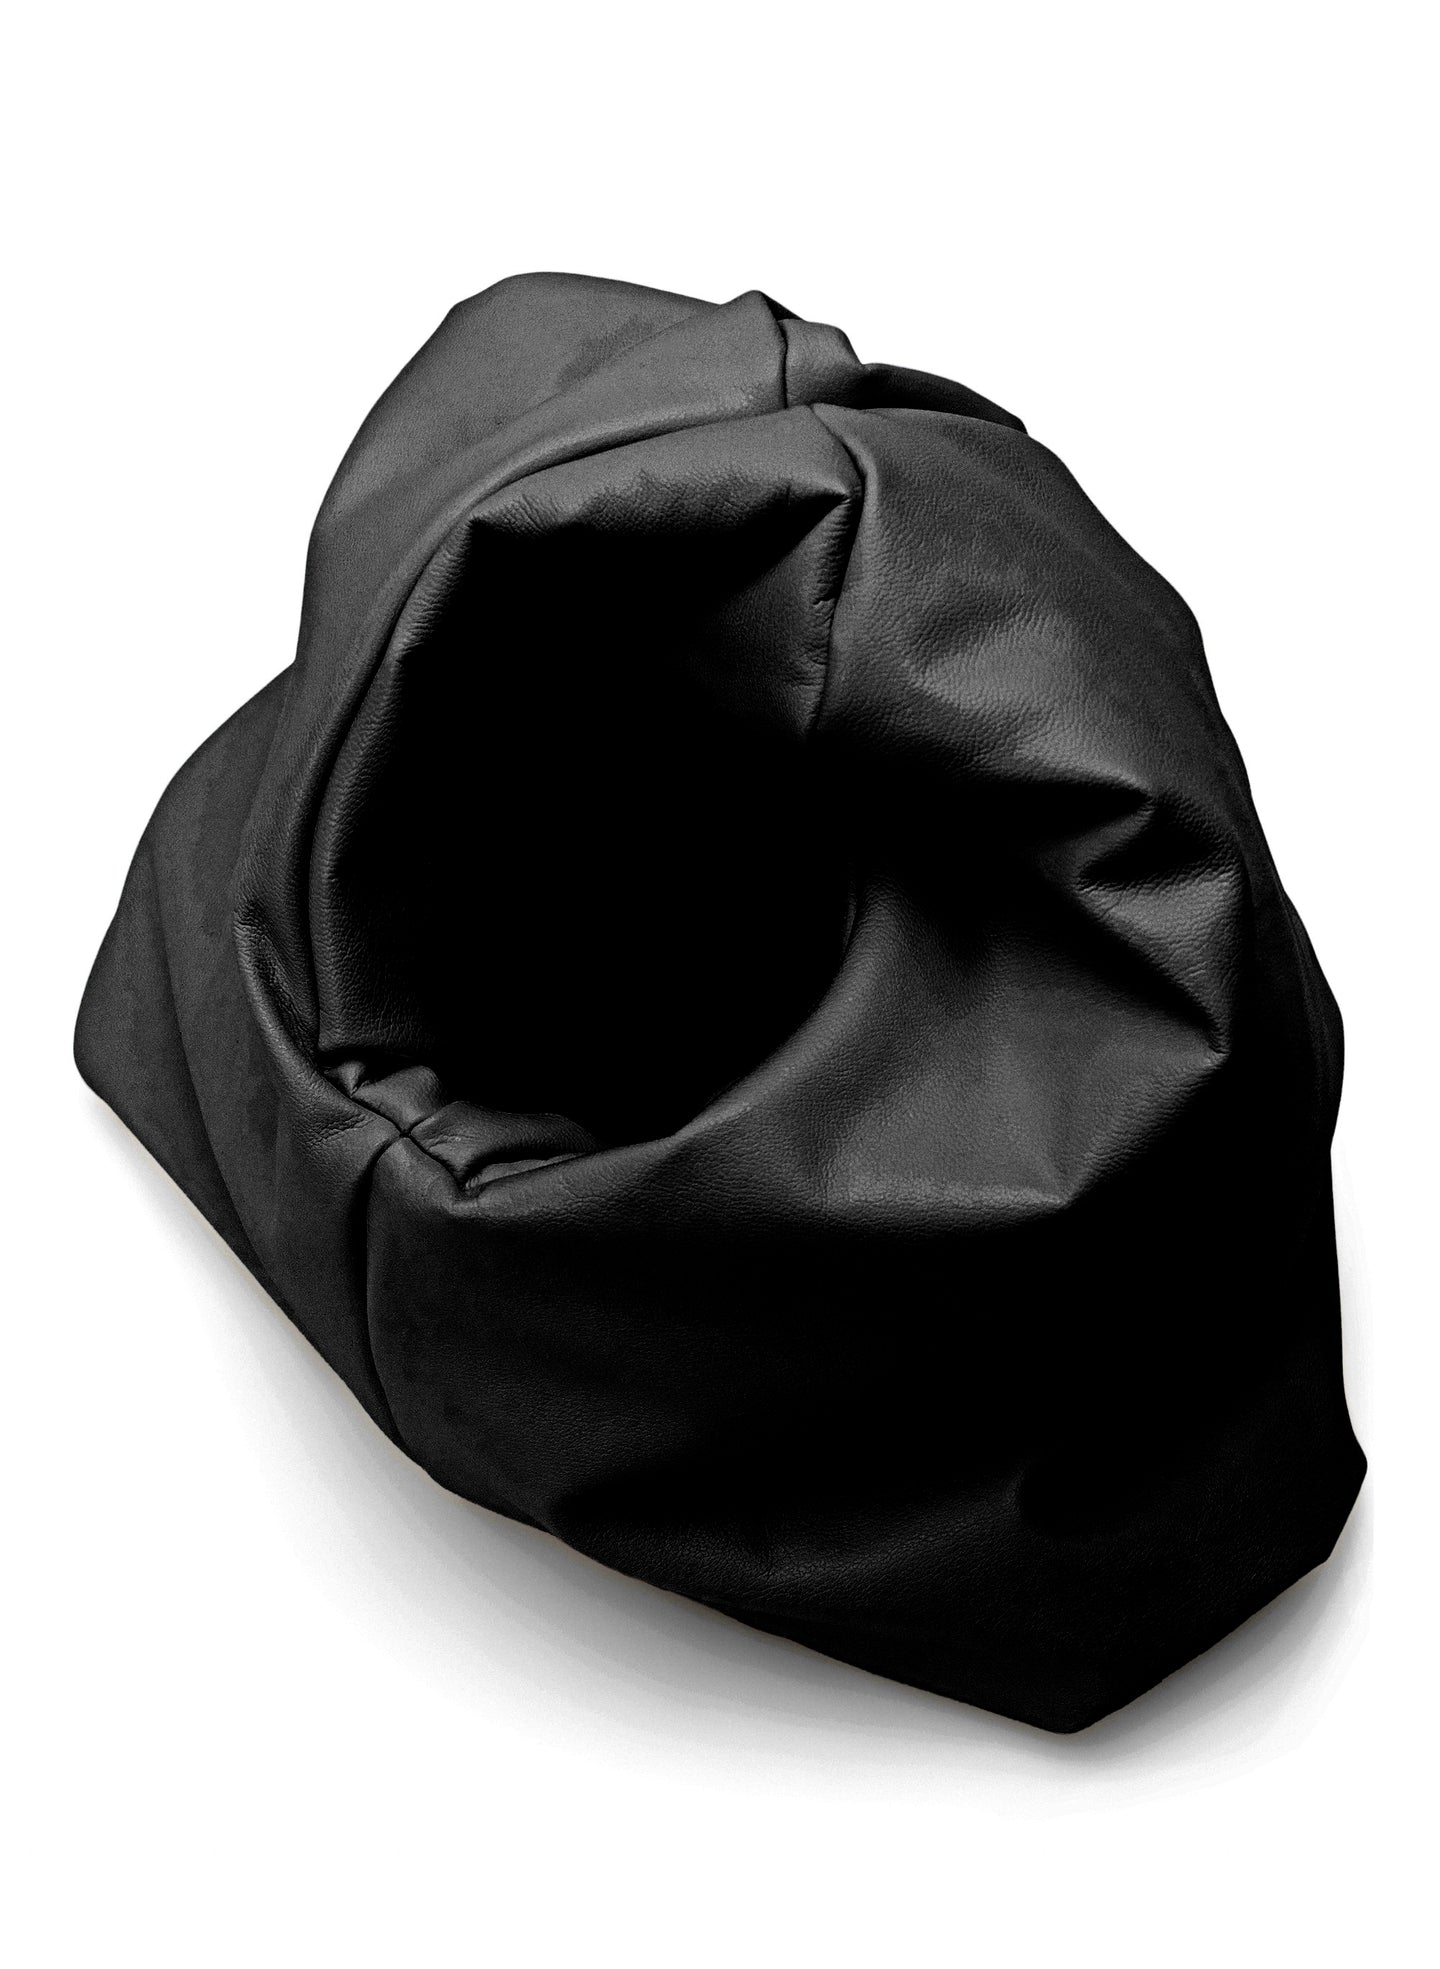 detail  view of black vegan leather handbag